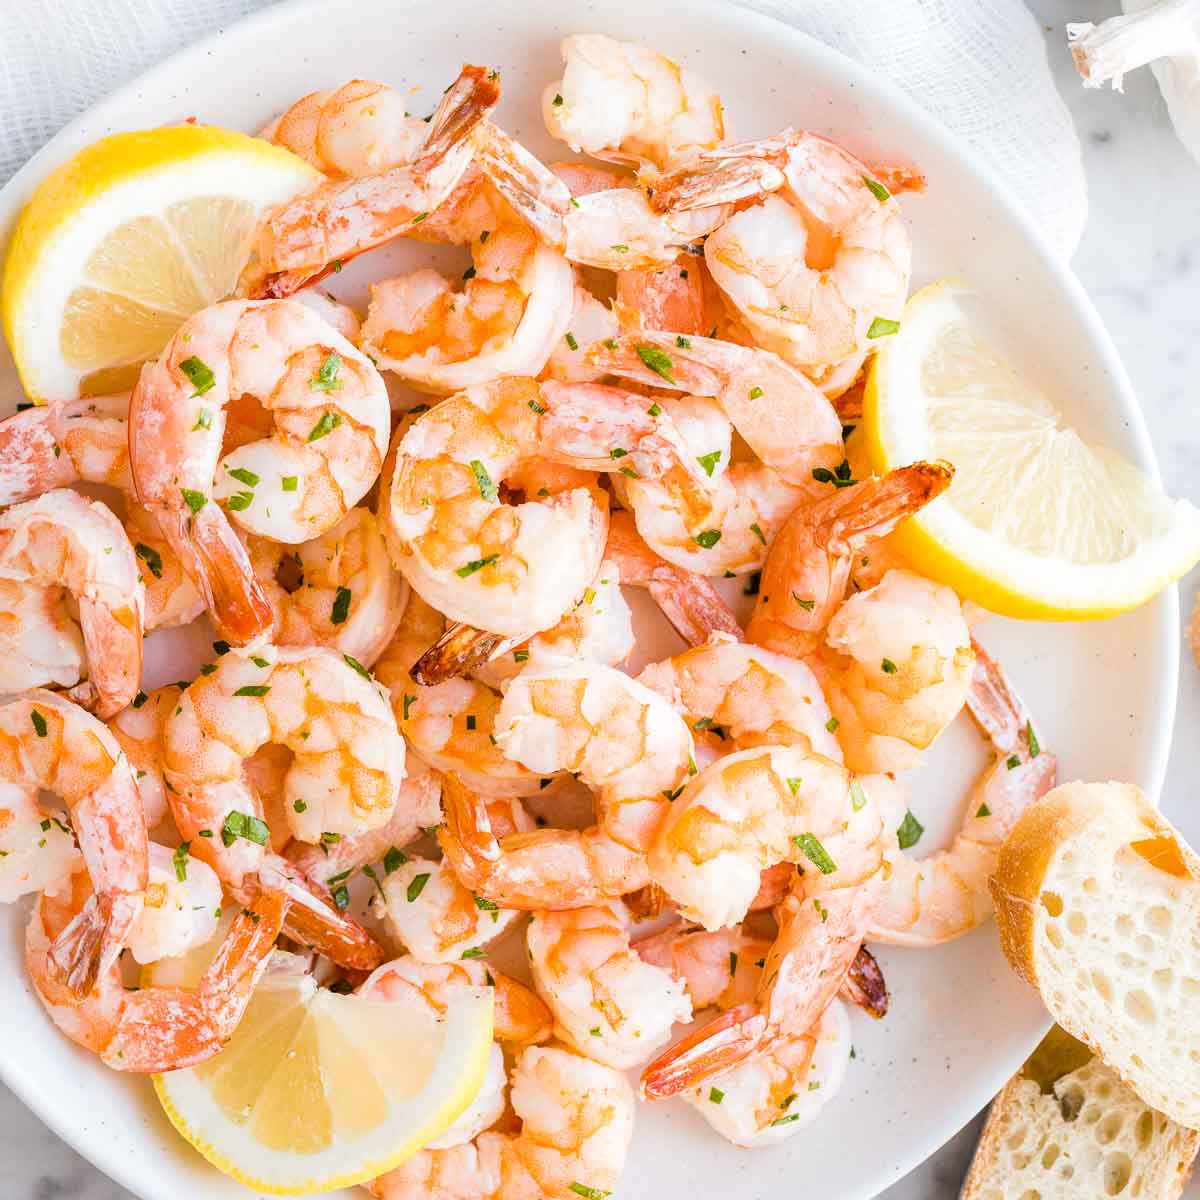 https://platedcravings.com/wp-content/uploads/2020/02/Air-Fryer-Shrimp-Featured-Plated-Cravings-1.jpg